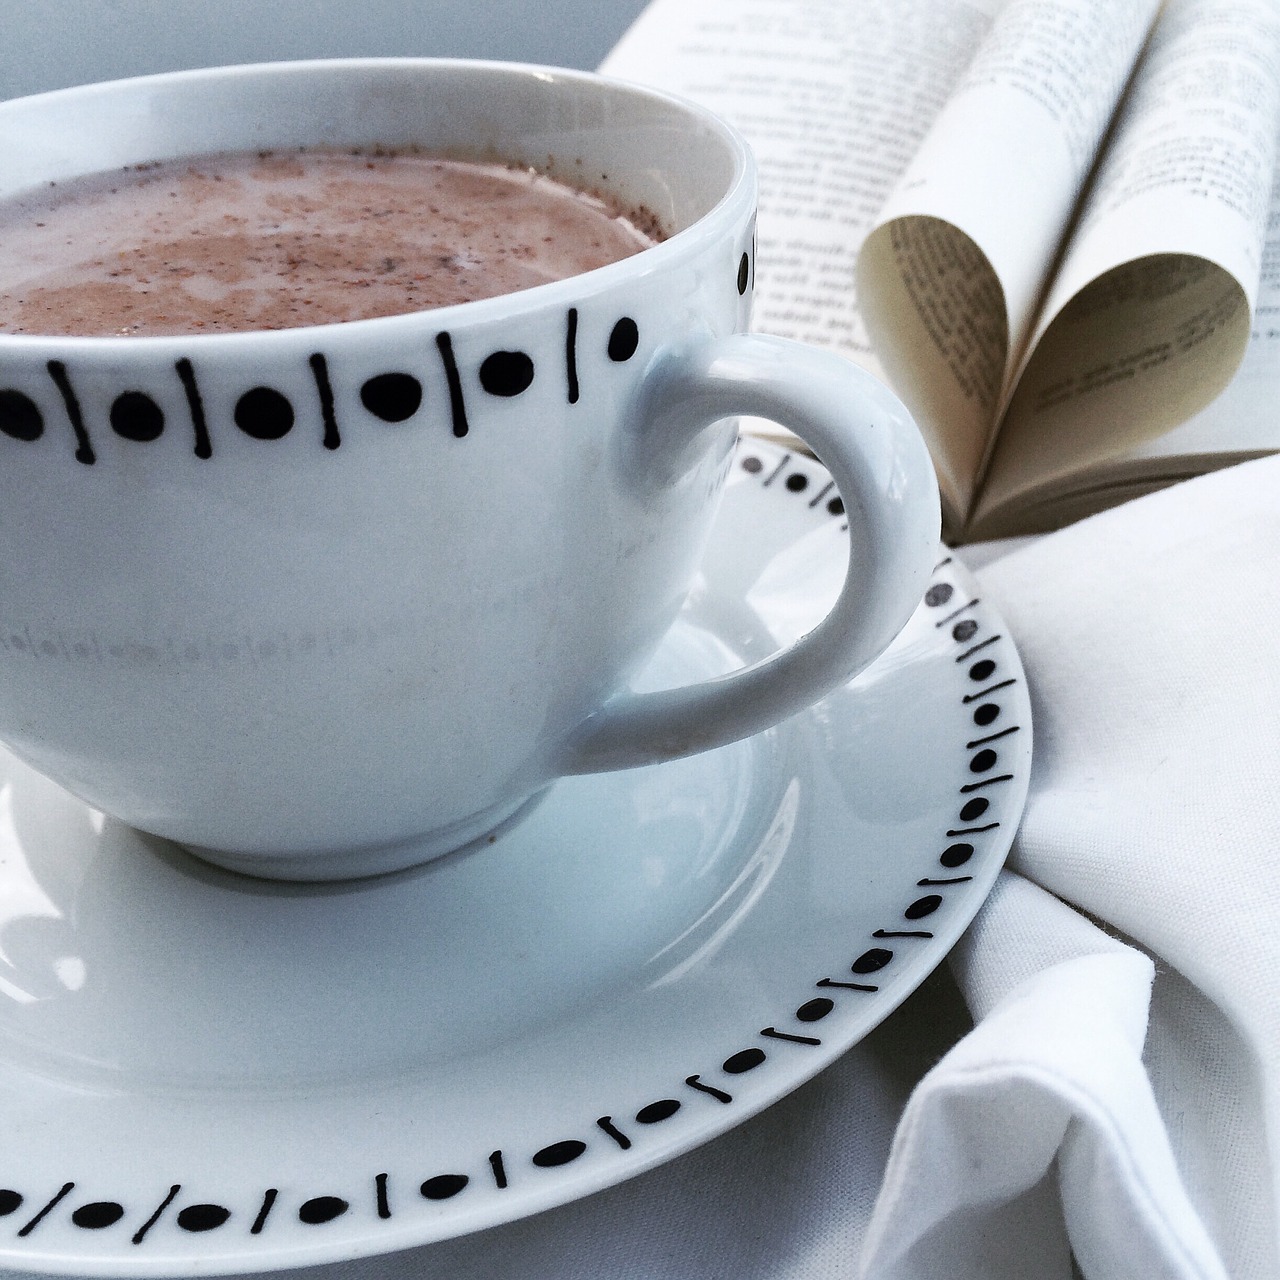 hot chocolate organic coffee break free photo